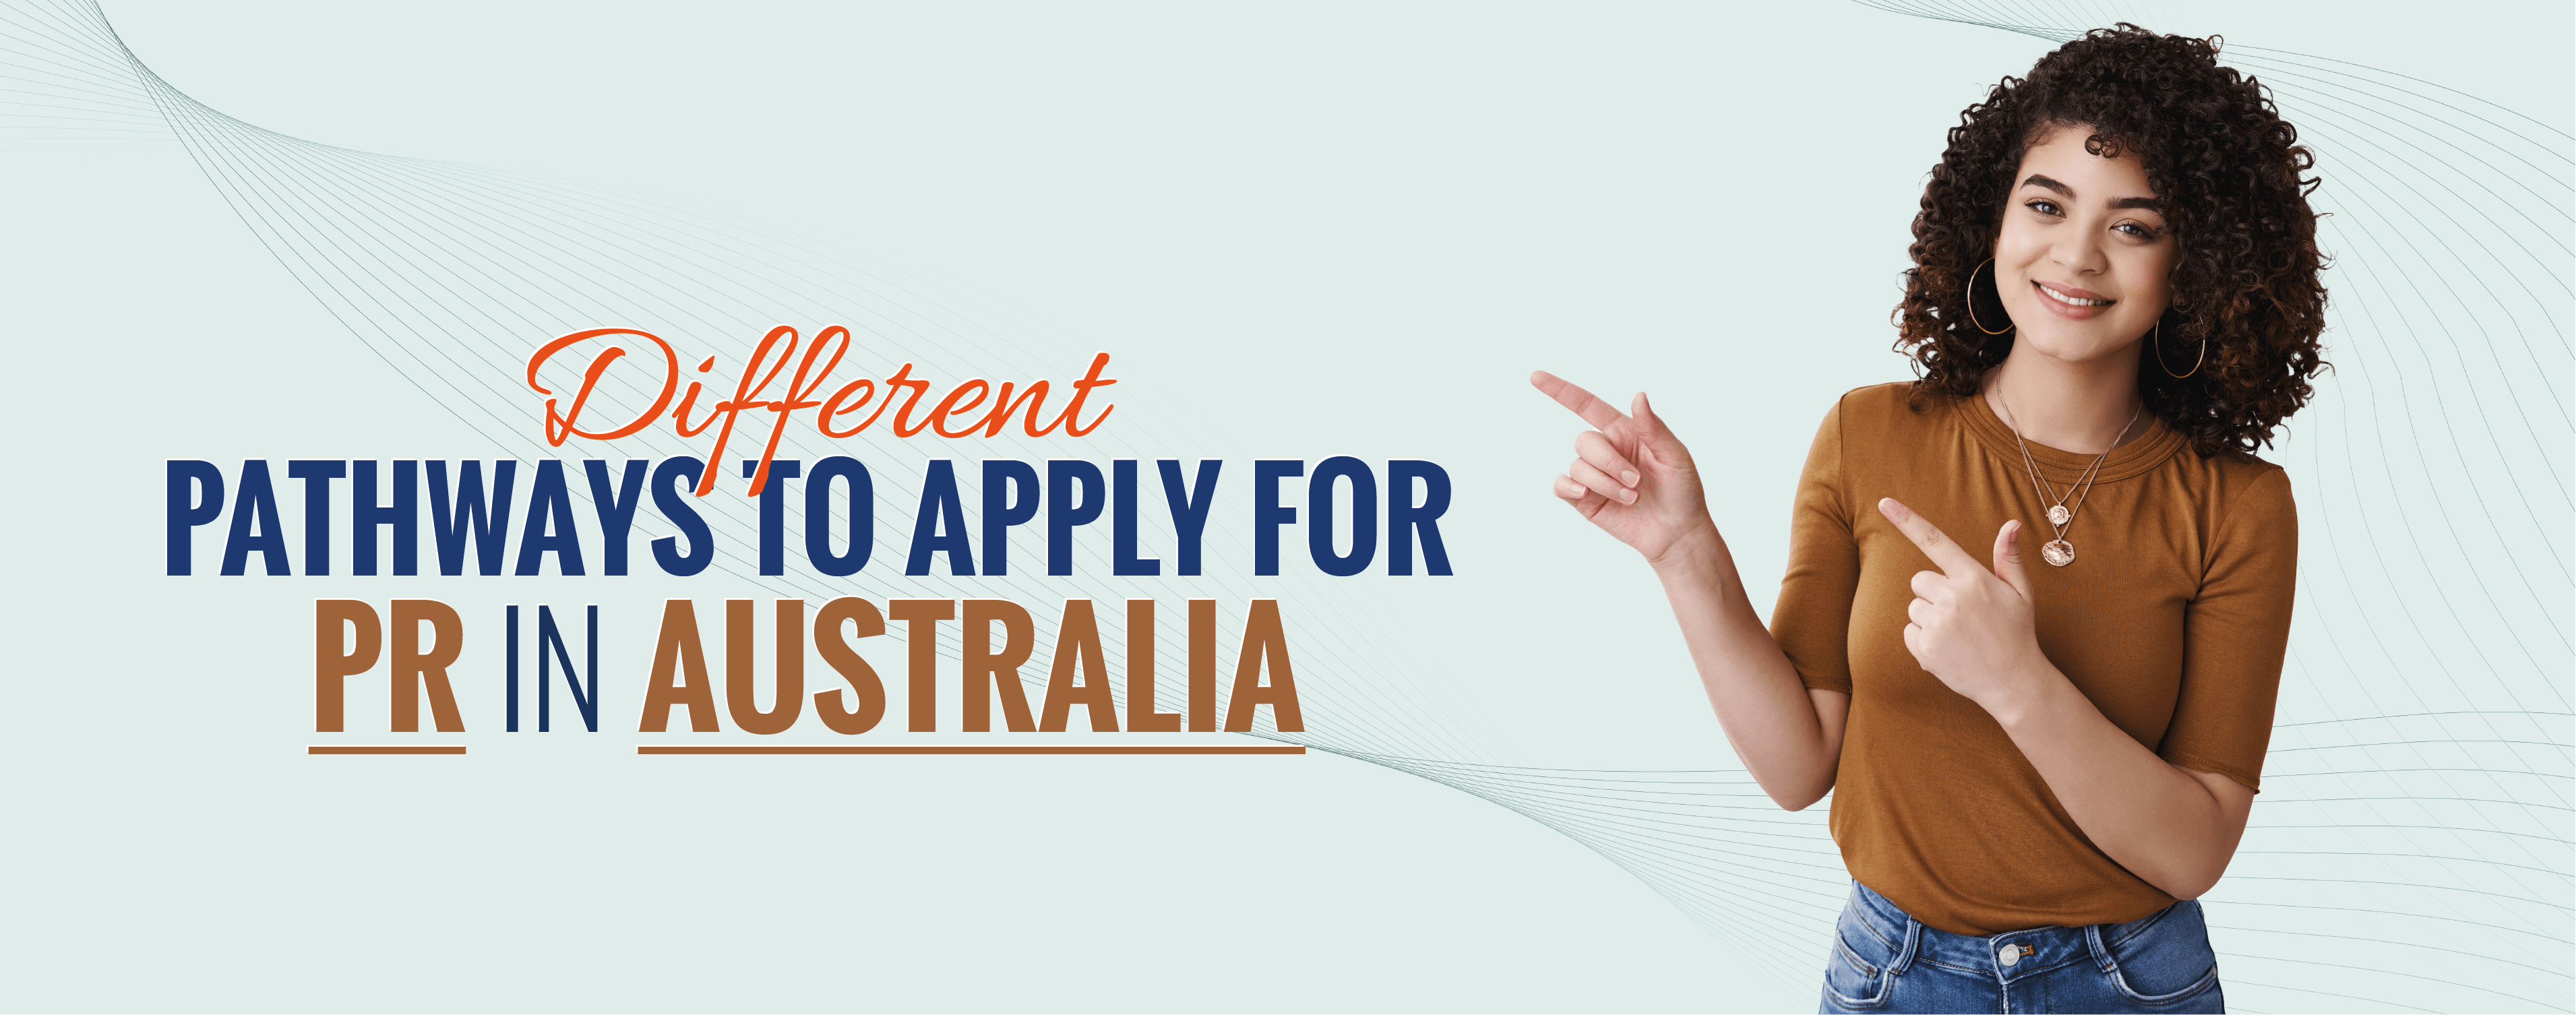 Apply for PR in Australia